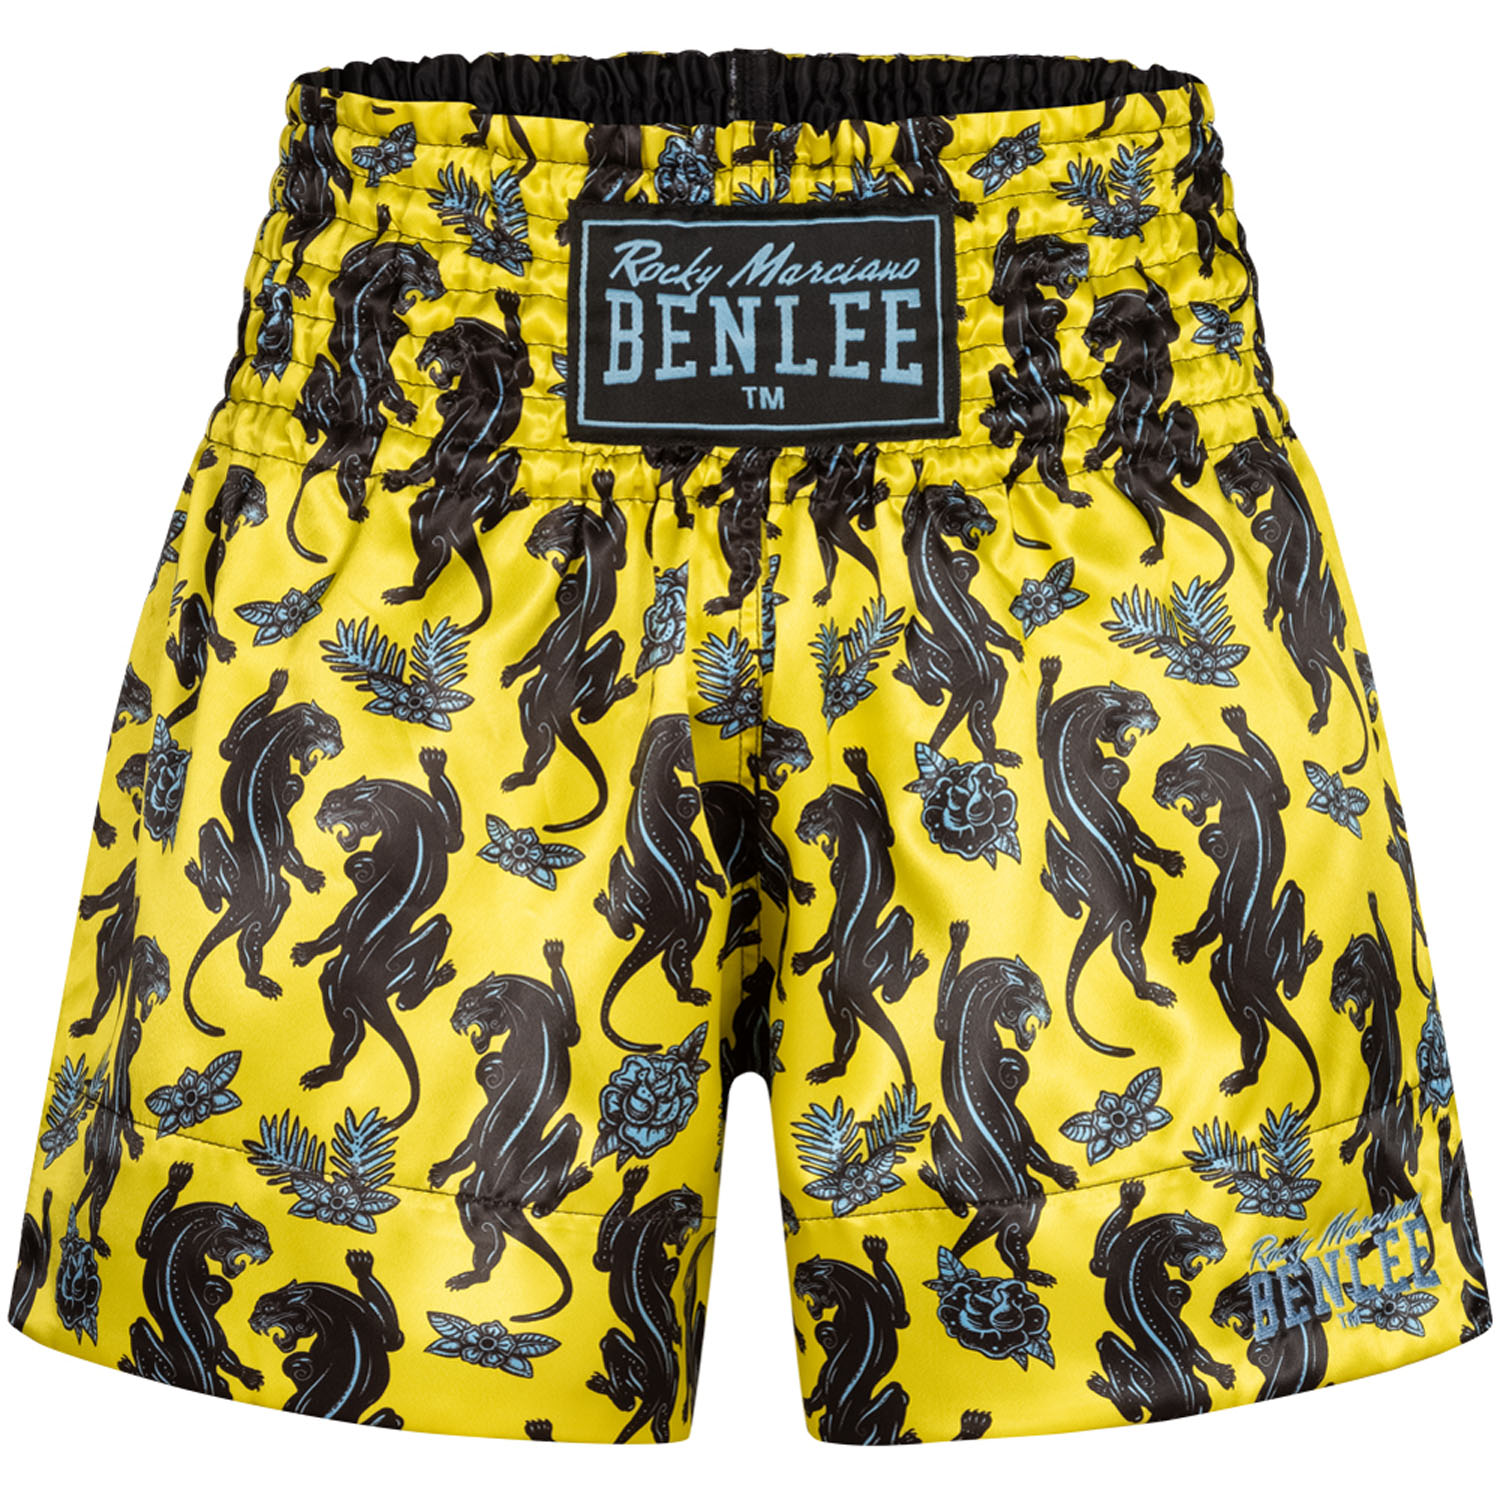 BENLEE Muay Thai Shorts, Panther, gelb